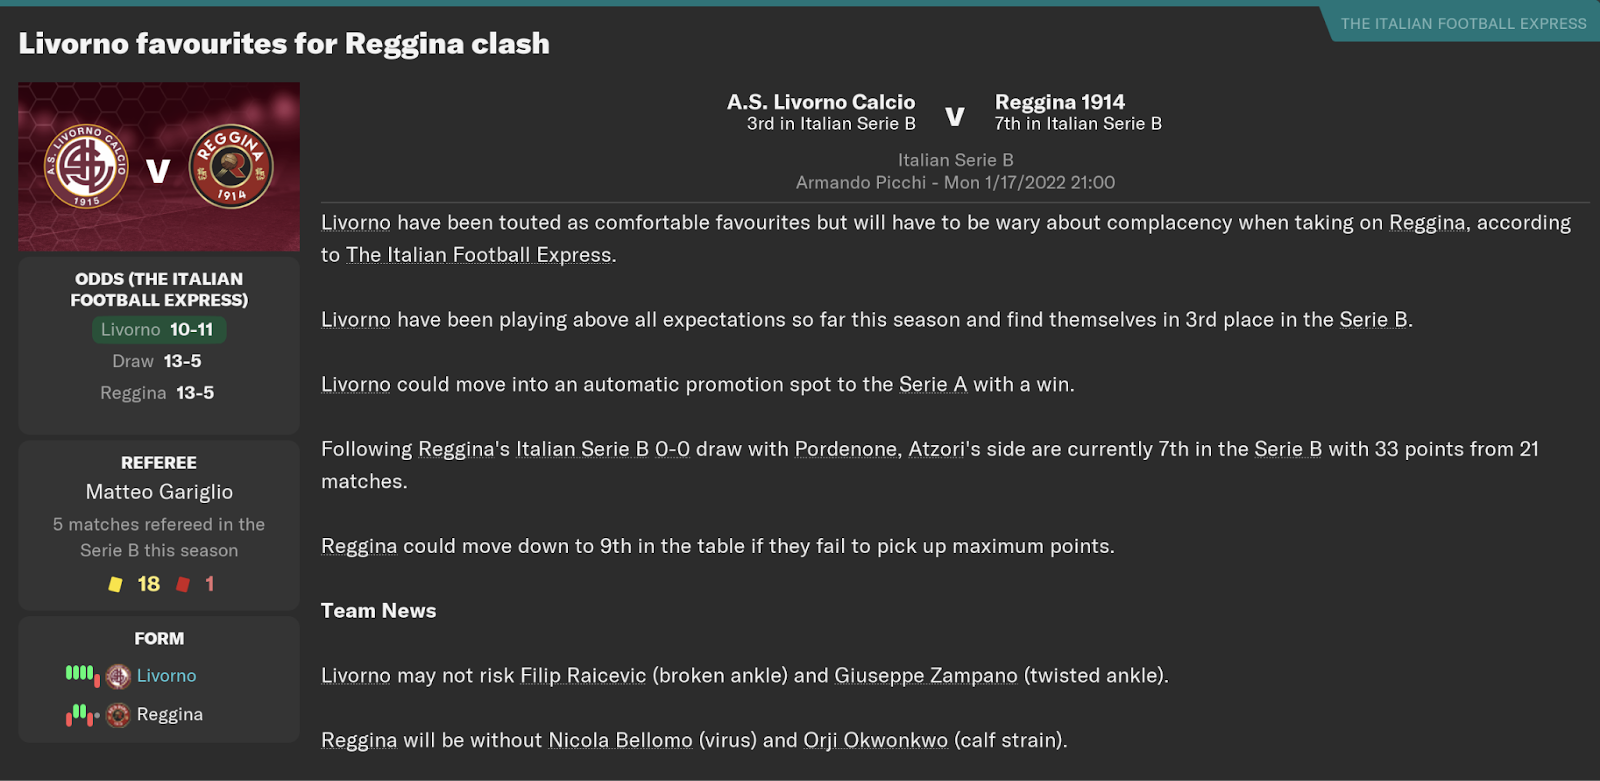 Serie B News: Ascoli vs Benevento Confirmed Line-ups